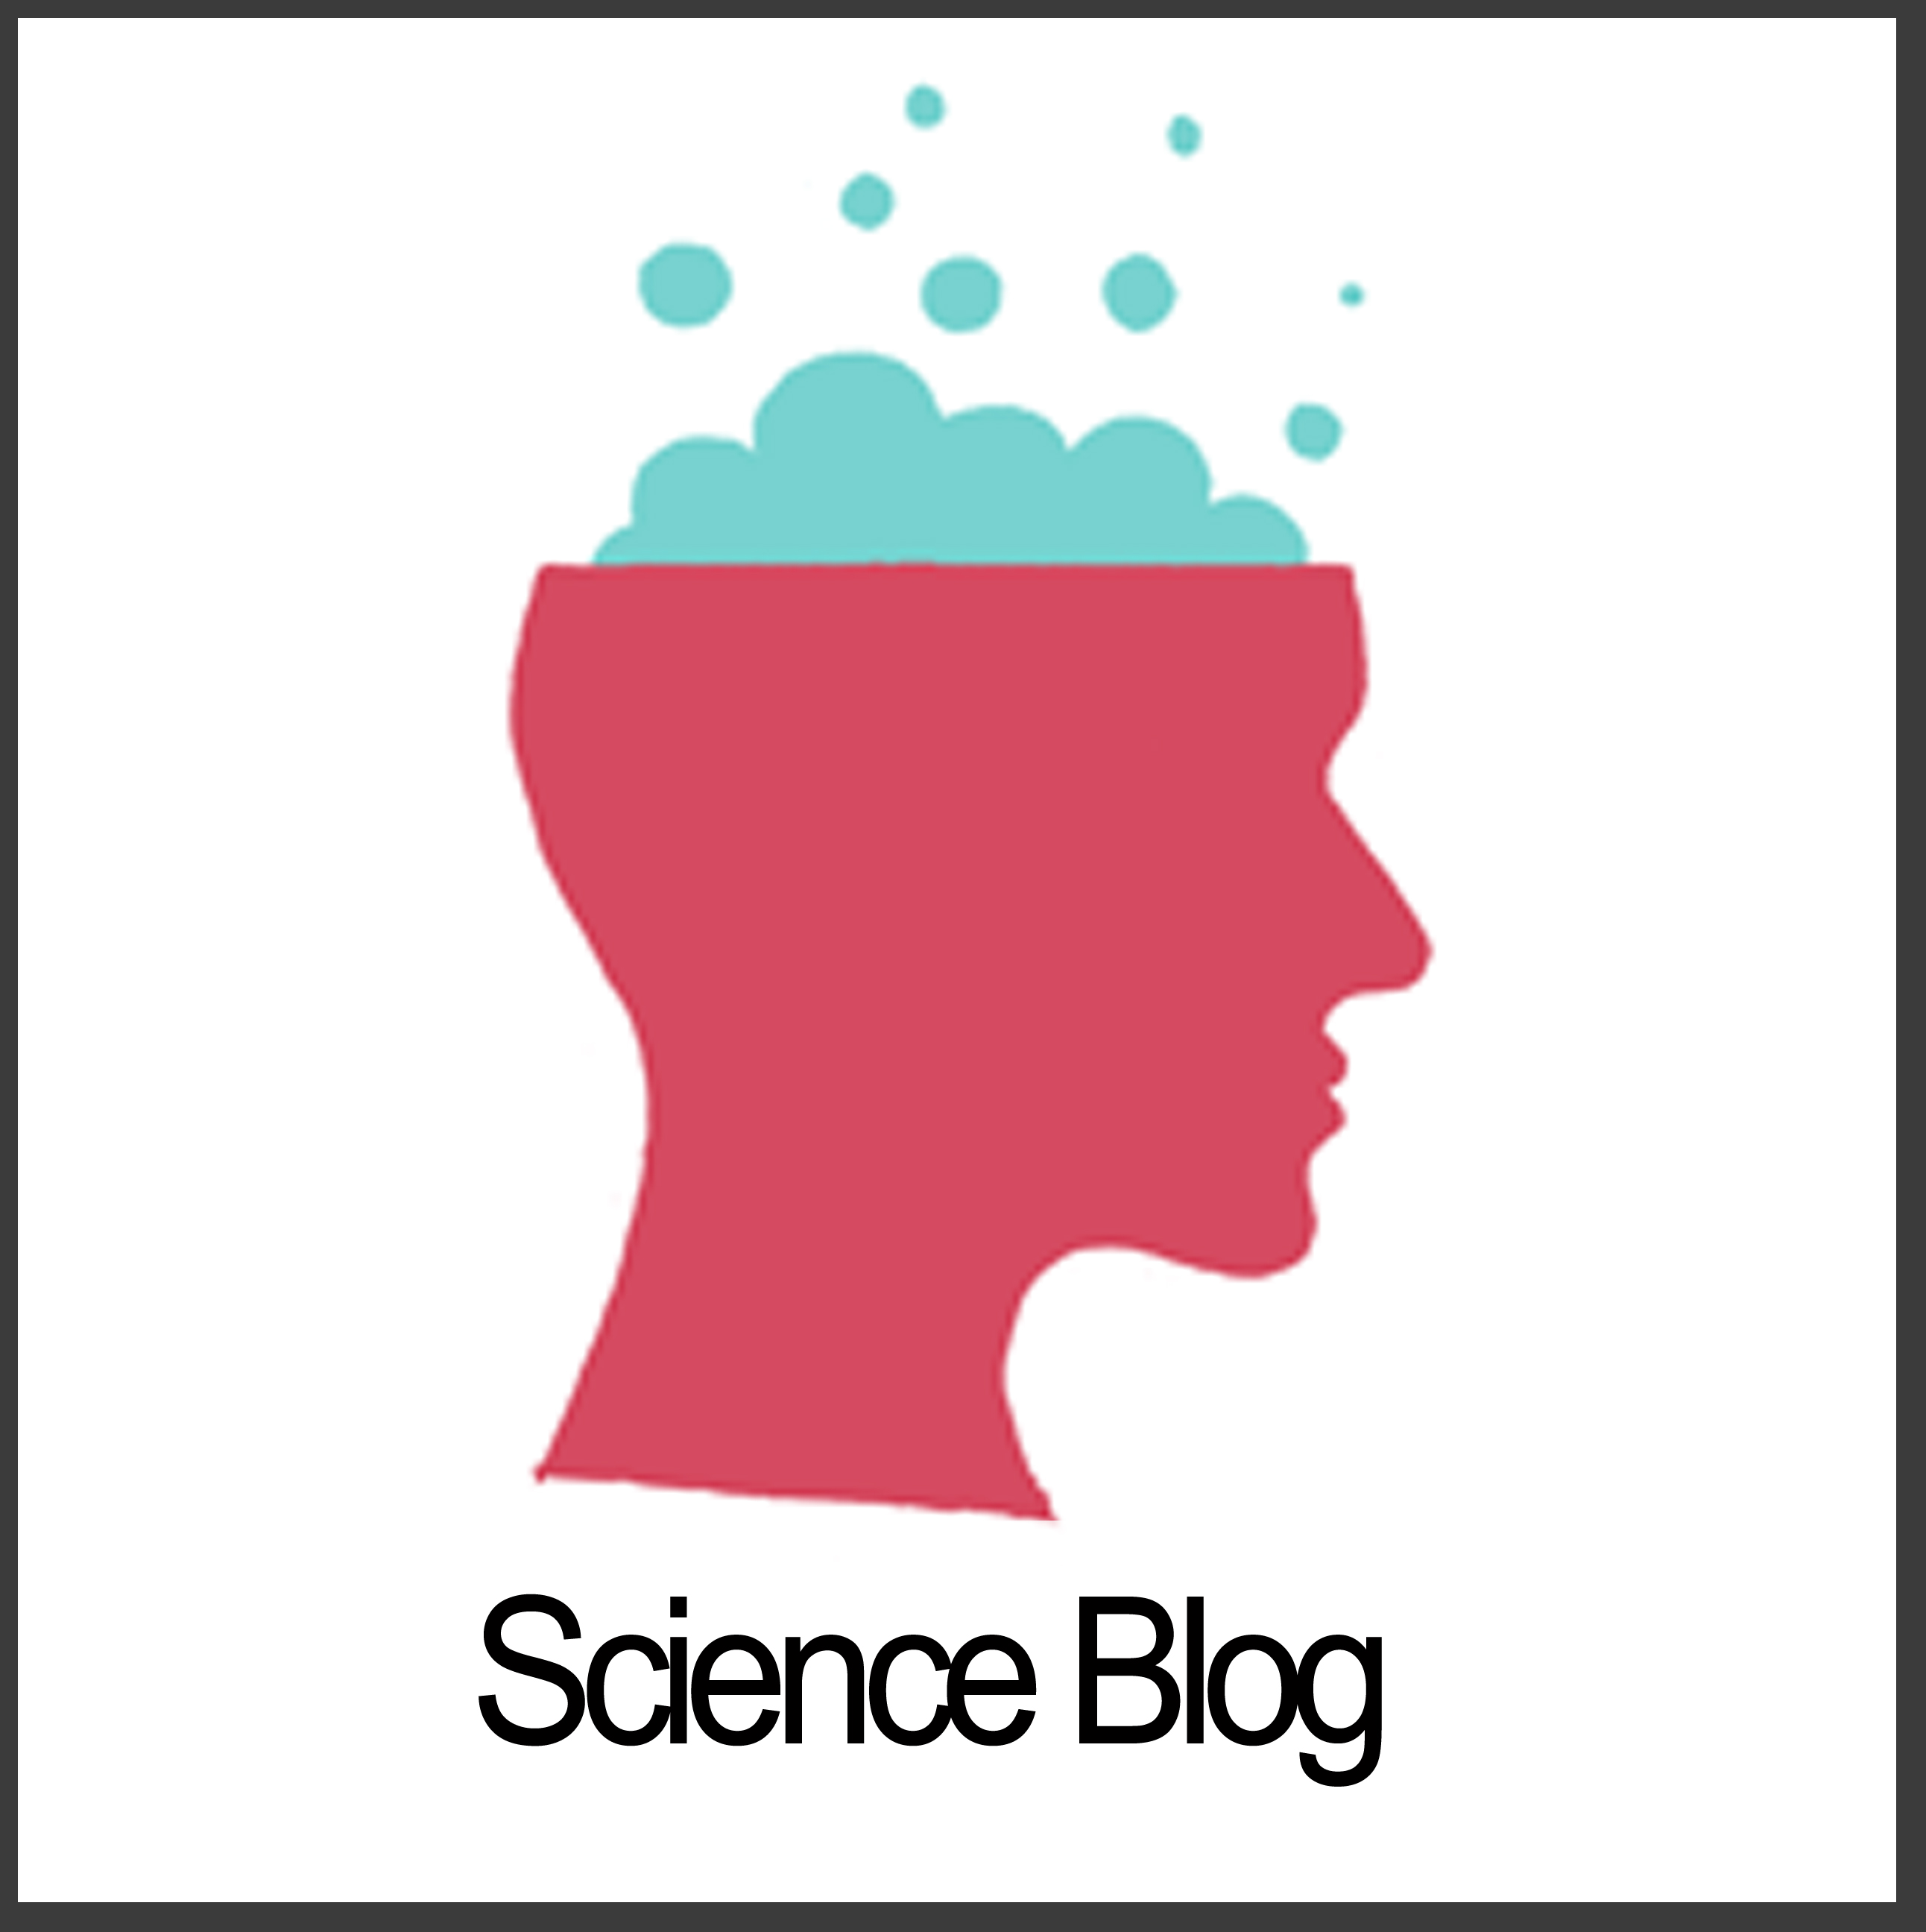 Science Blog Tile copy